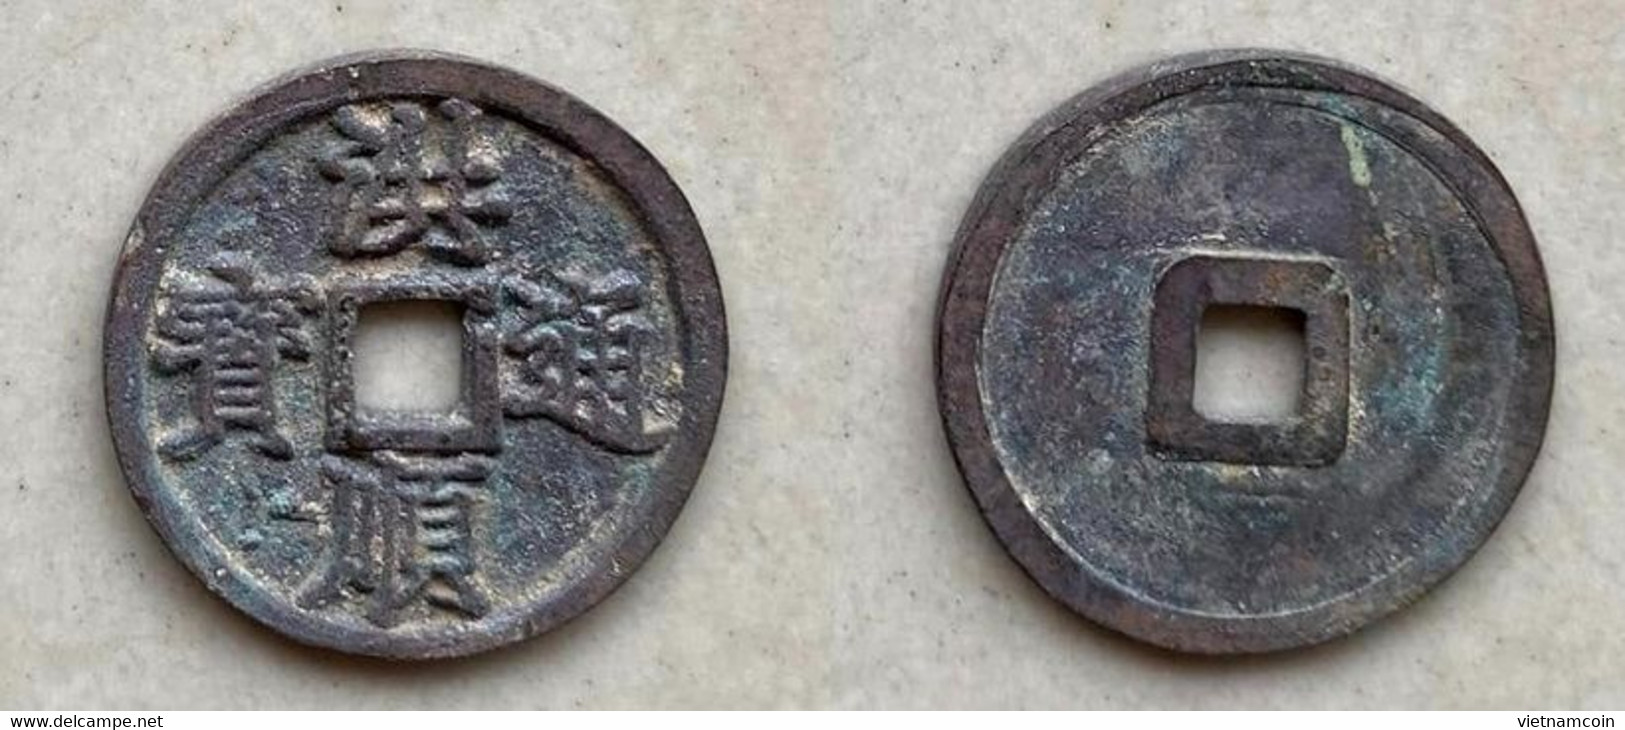 Ancient Annam Coin  Hong Thuan Thong Bao 1510-1516 - Vietnam